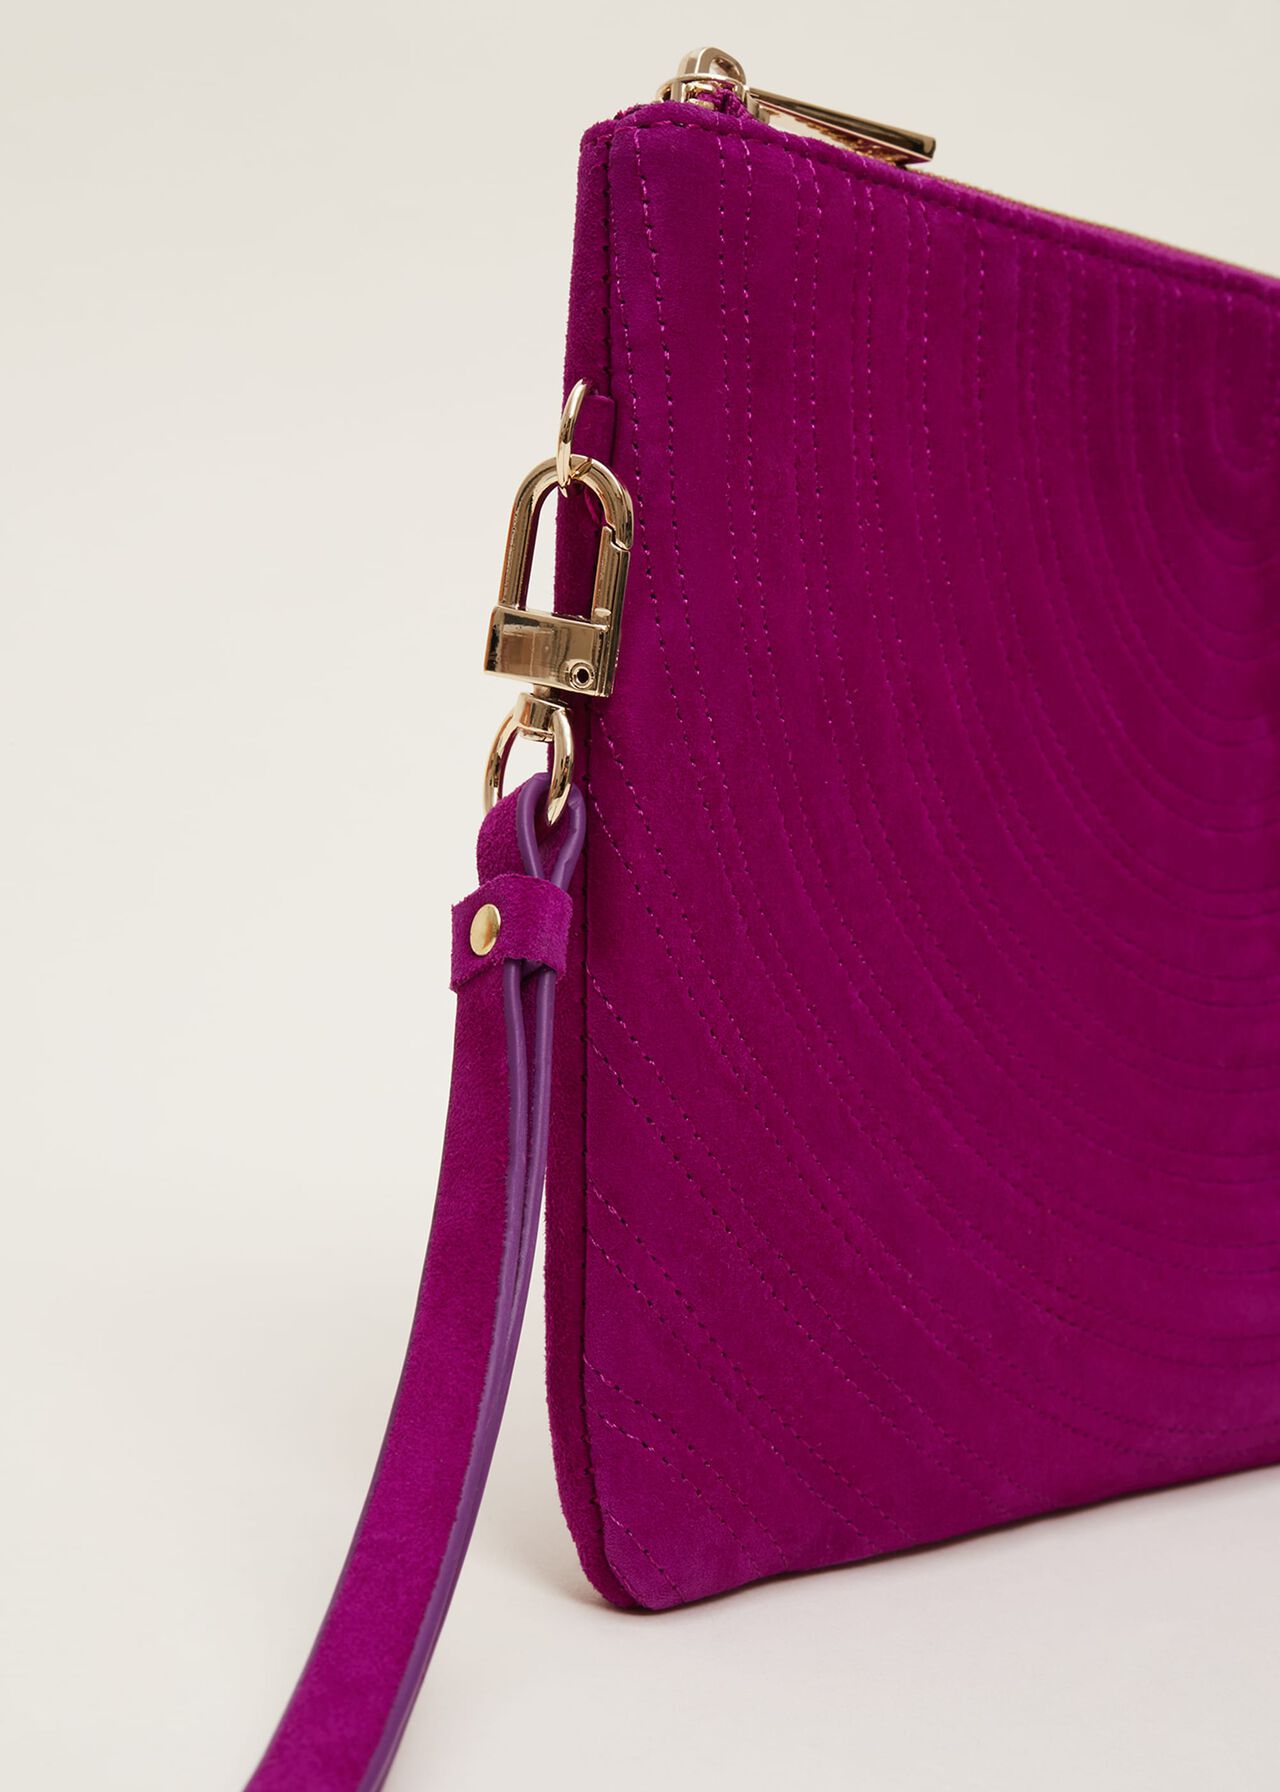 Dark Pink Suede Clutch Bag